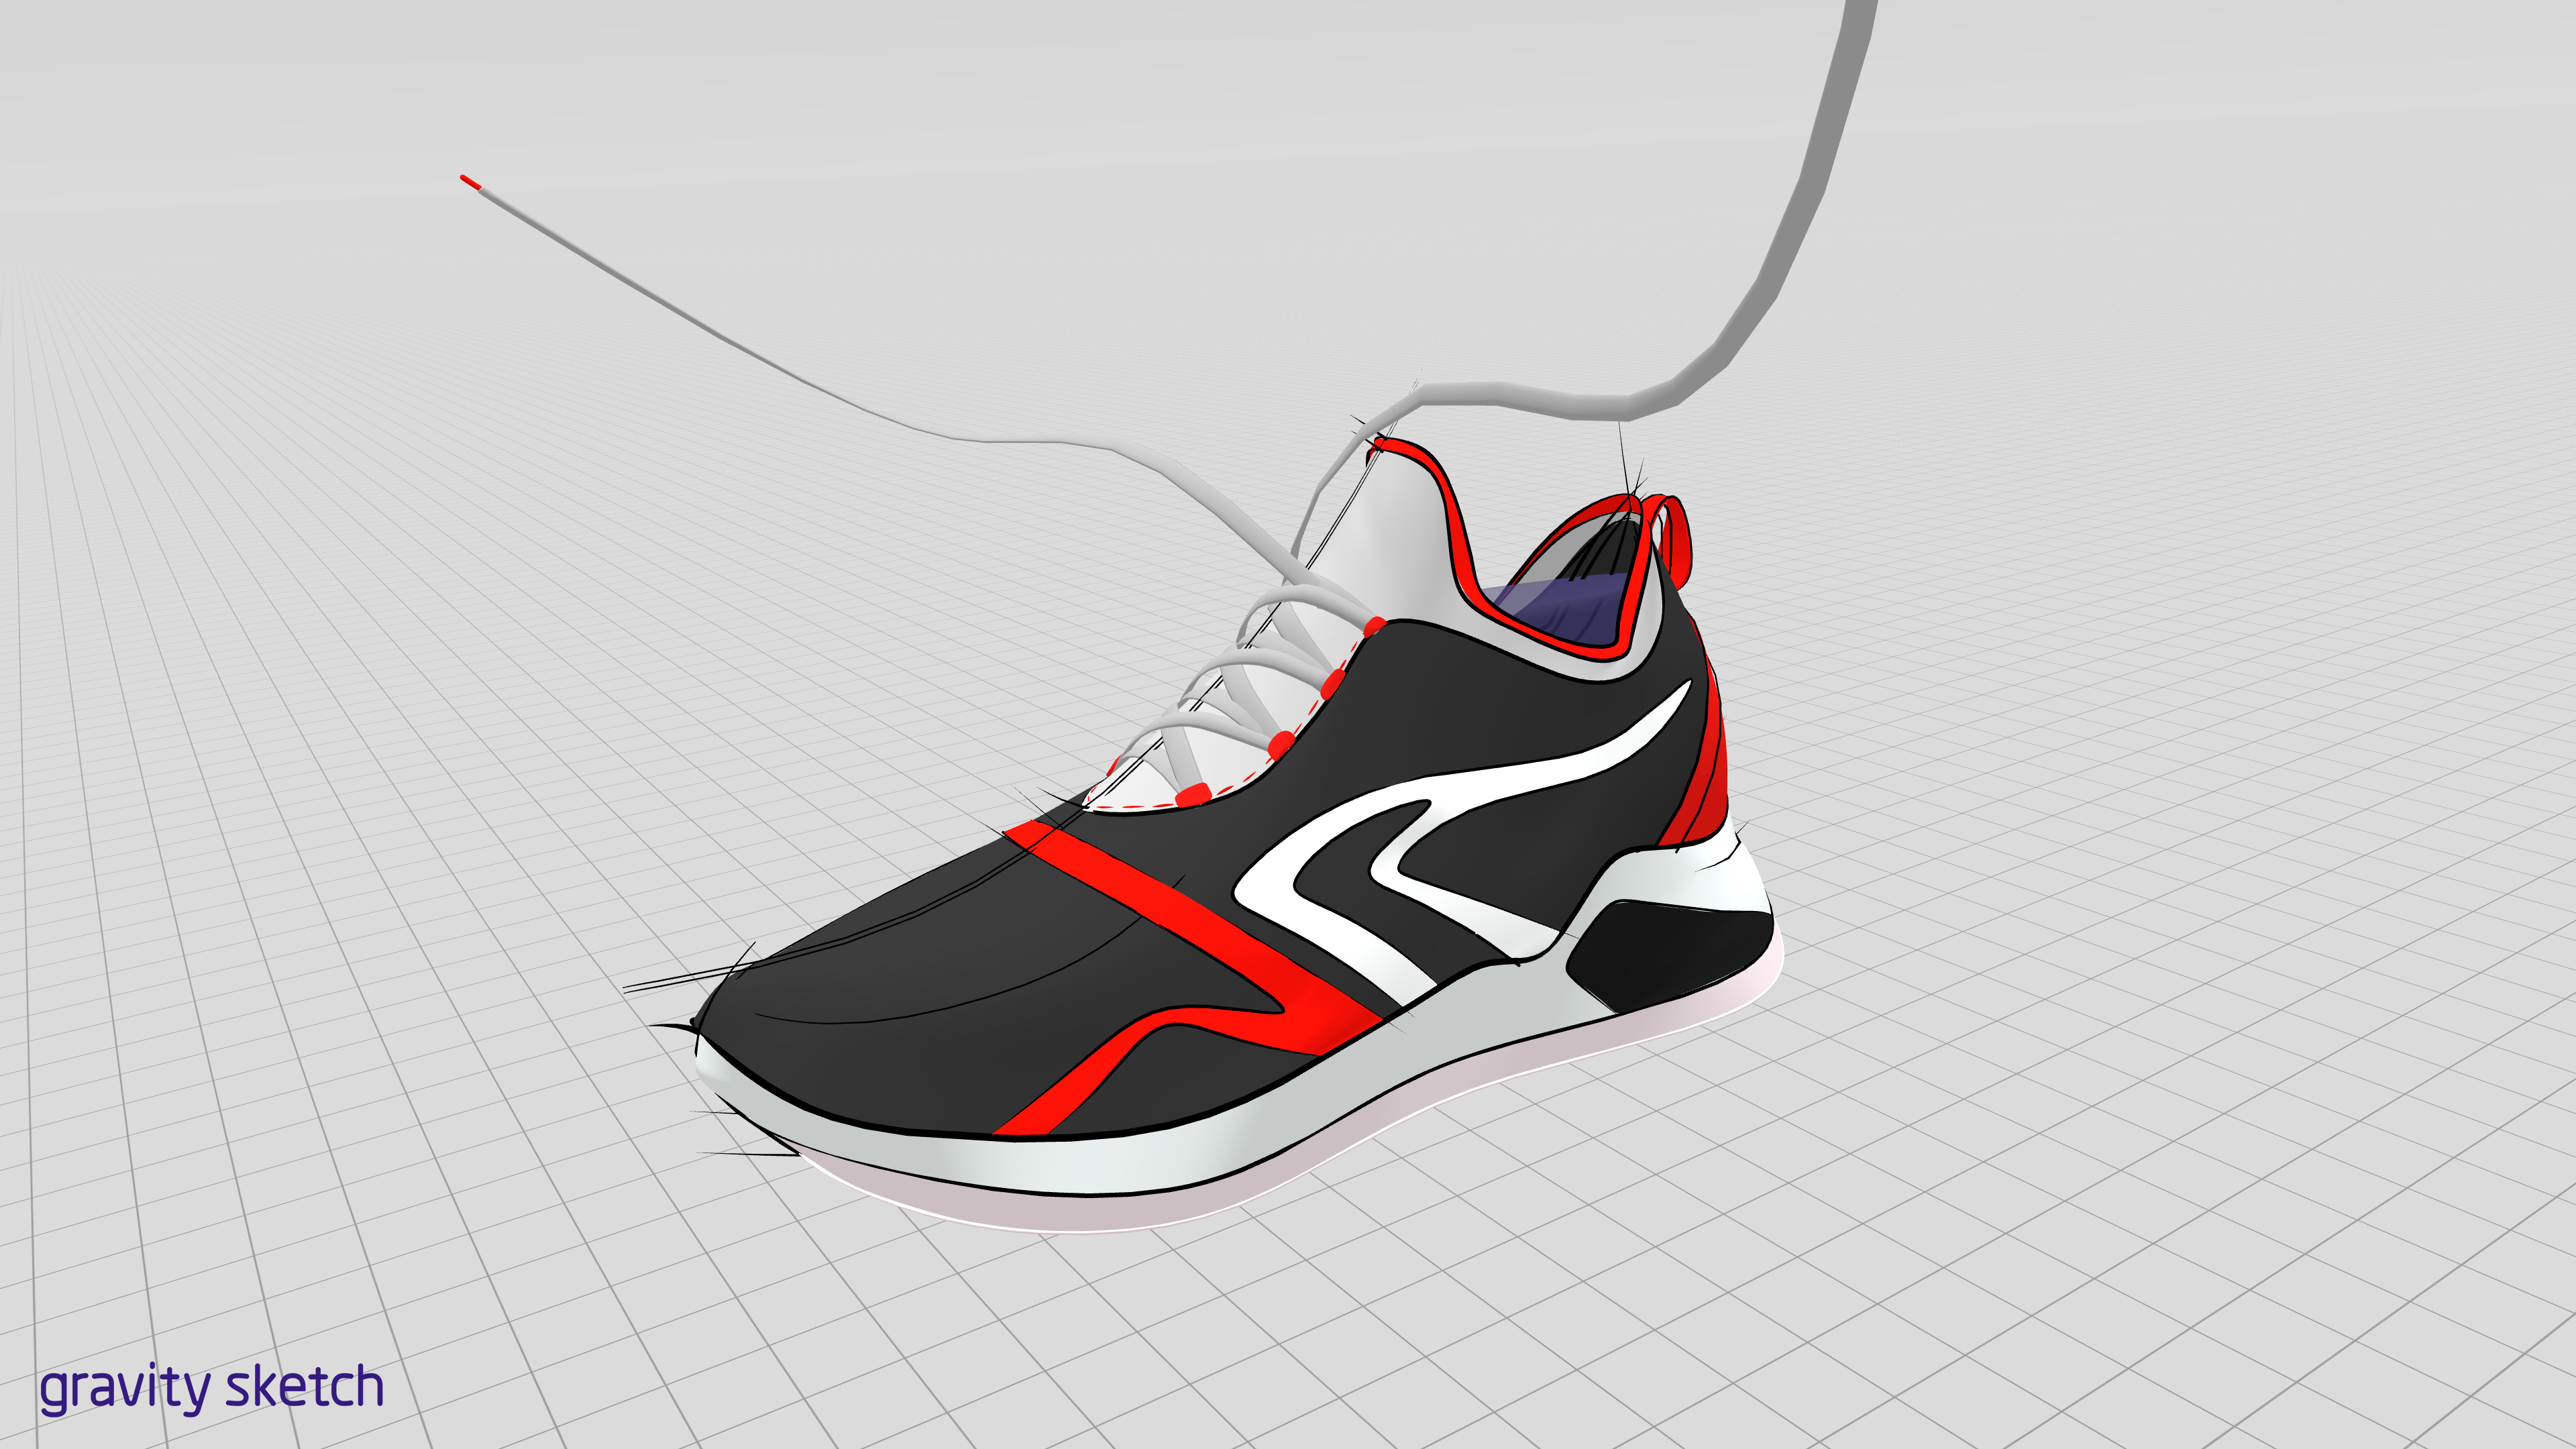 Shoe designed in Gravity sketch